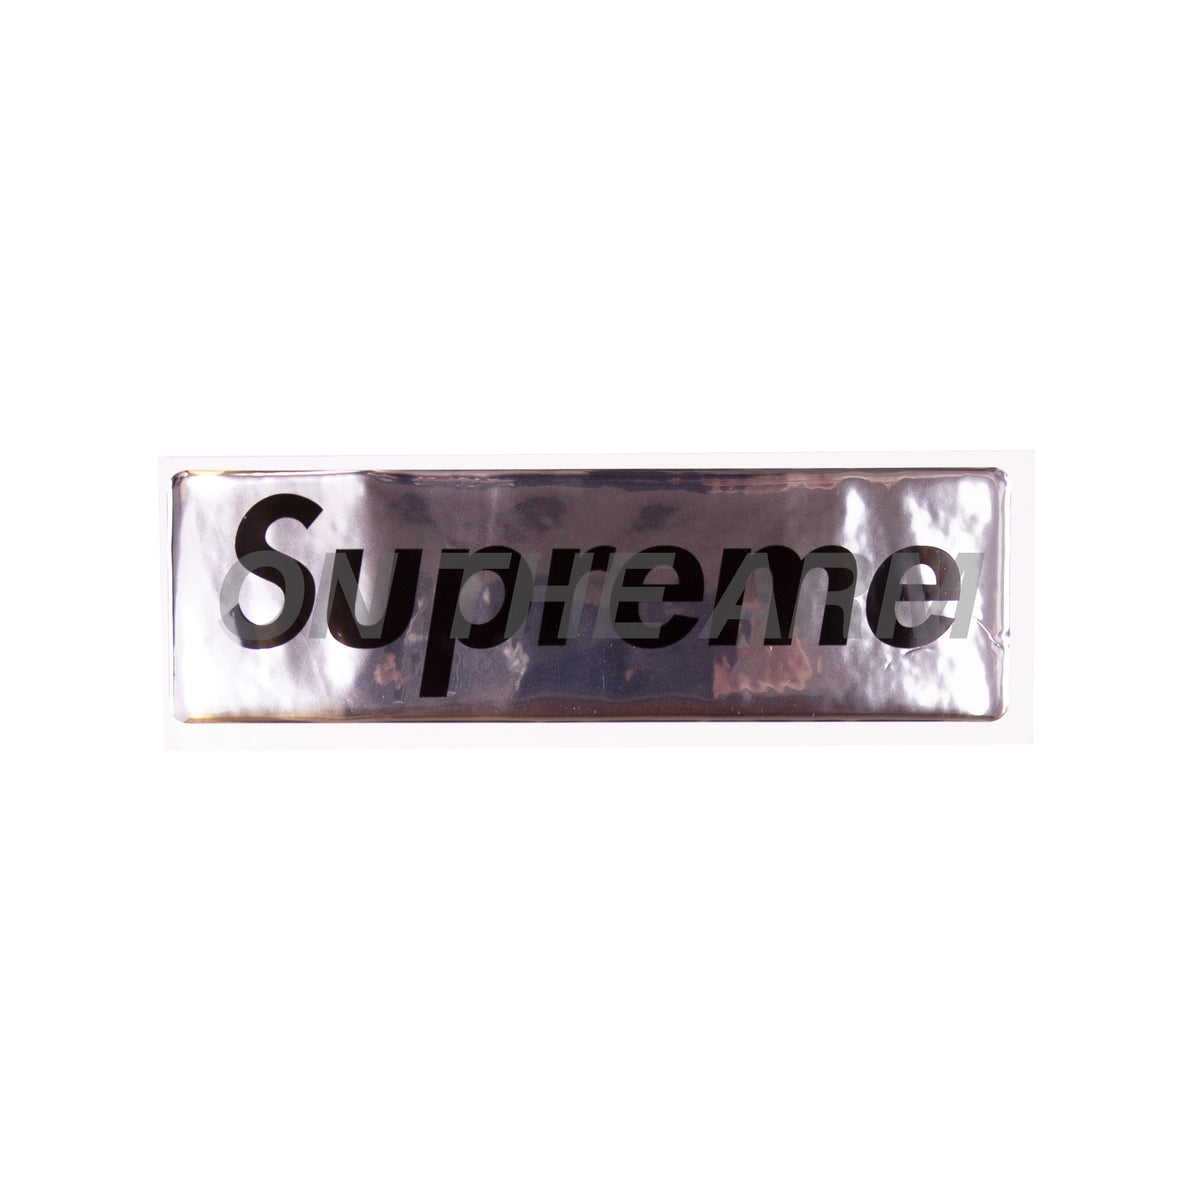 Supreme Red Box Logo Sticker